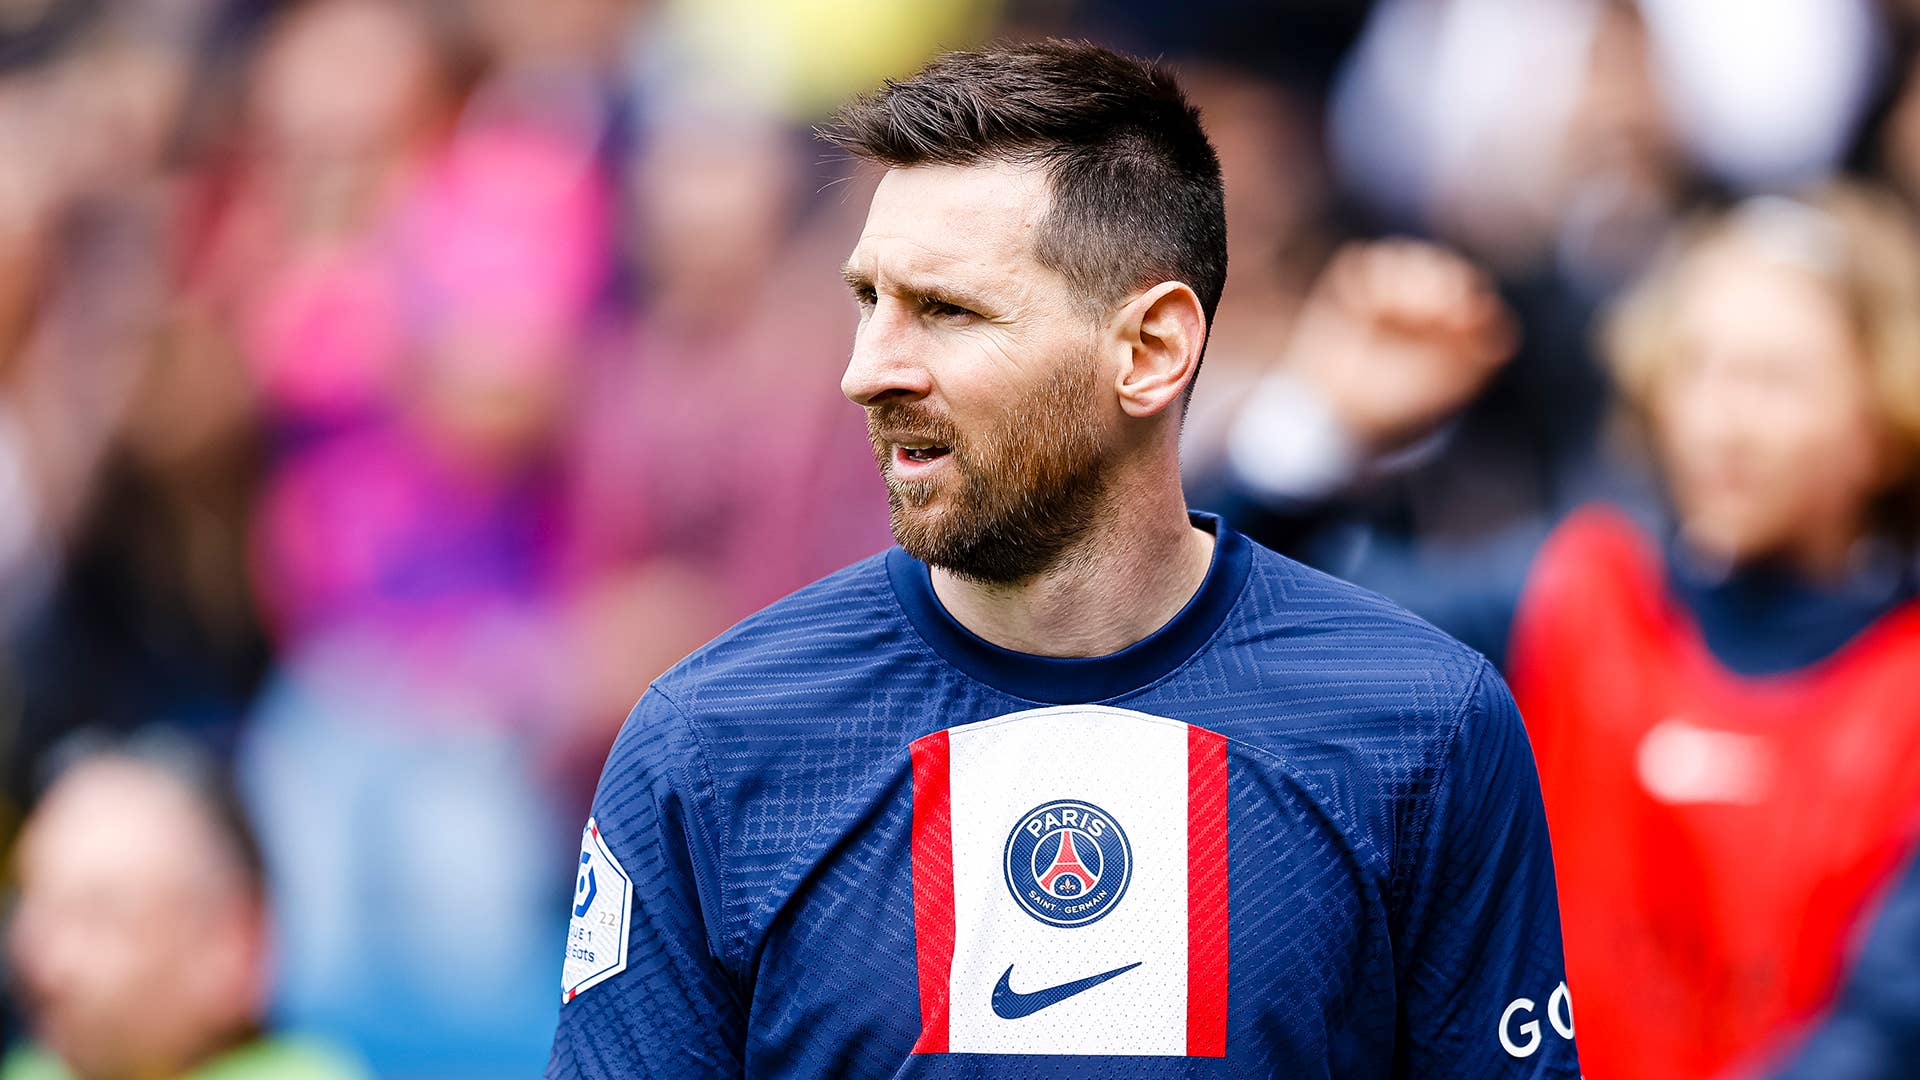 Lionel Messi of Paris Saint Germain walks in the field